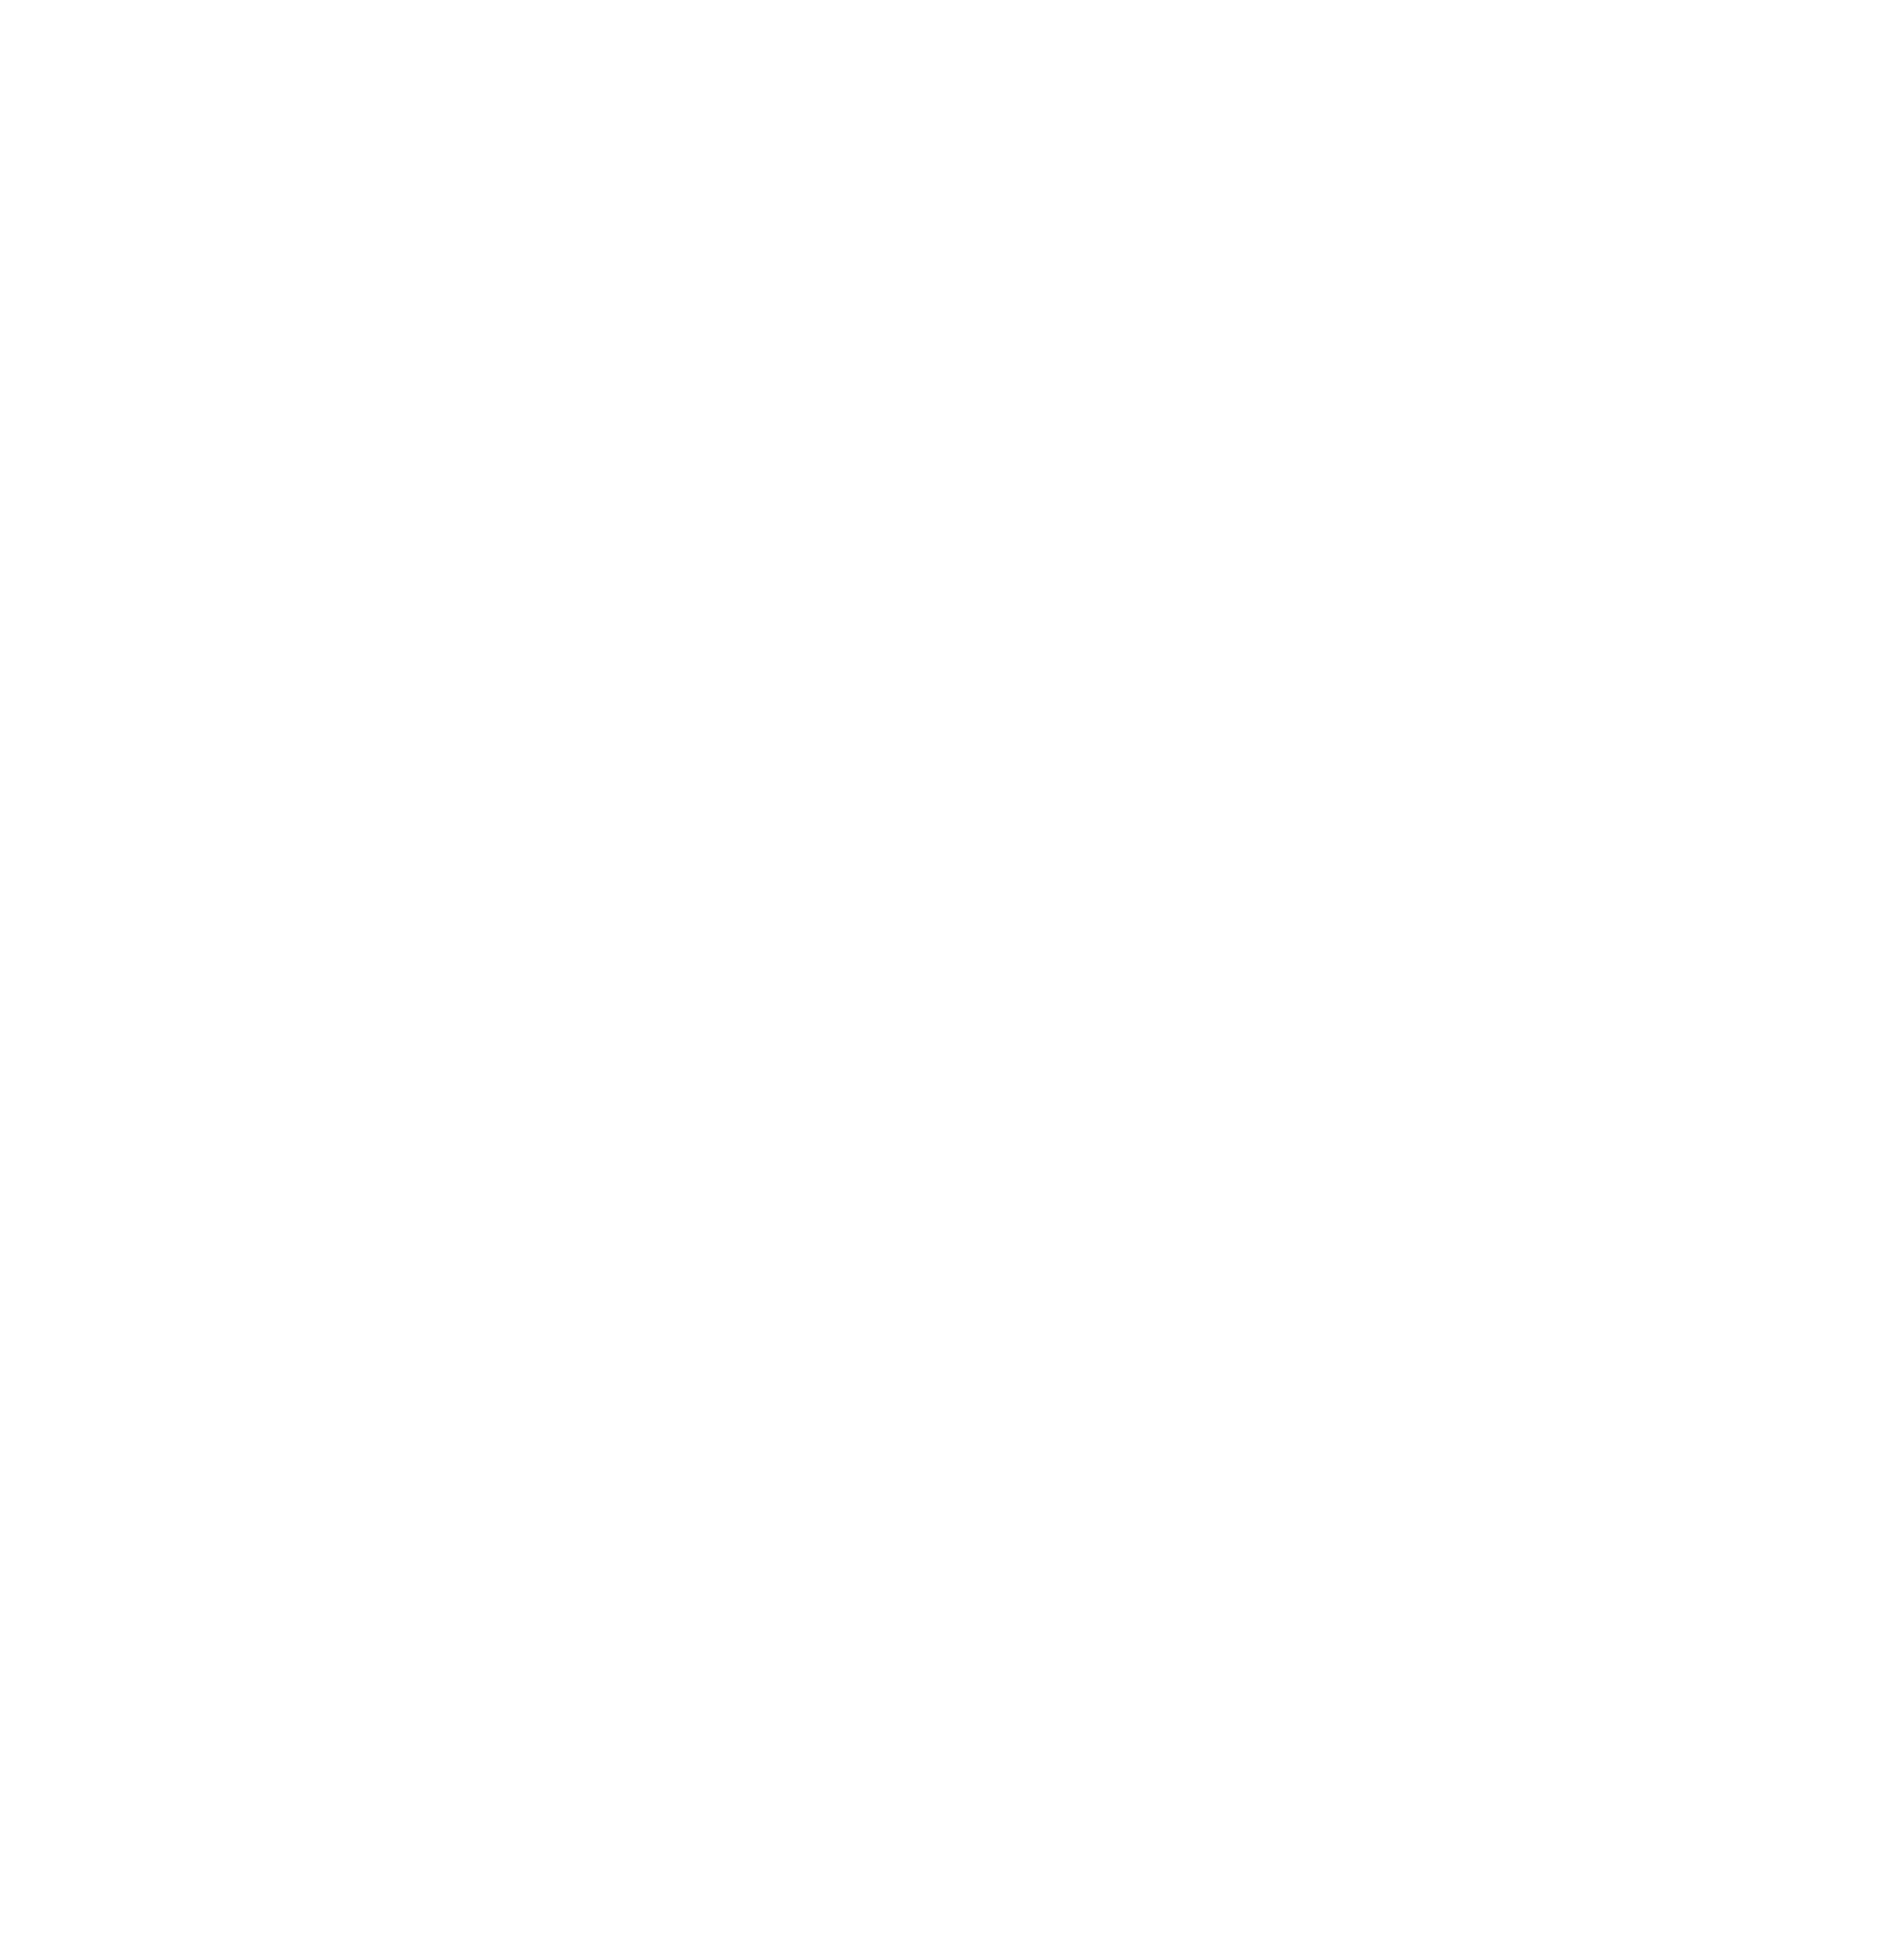 Movement Method